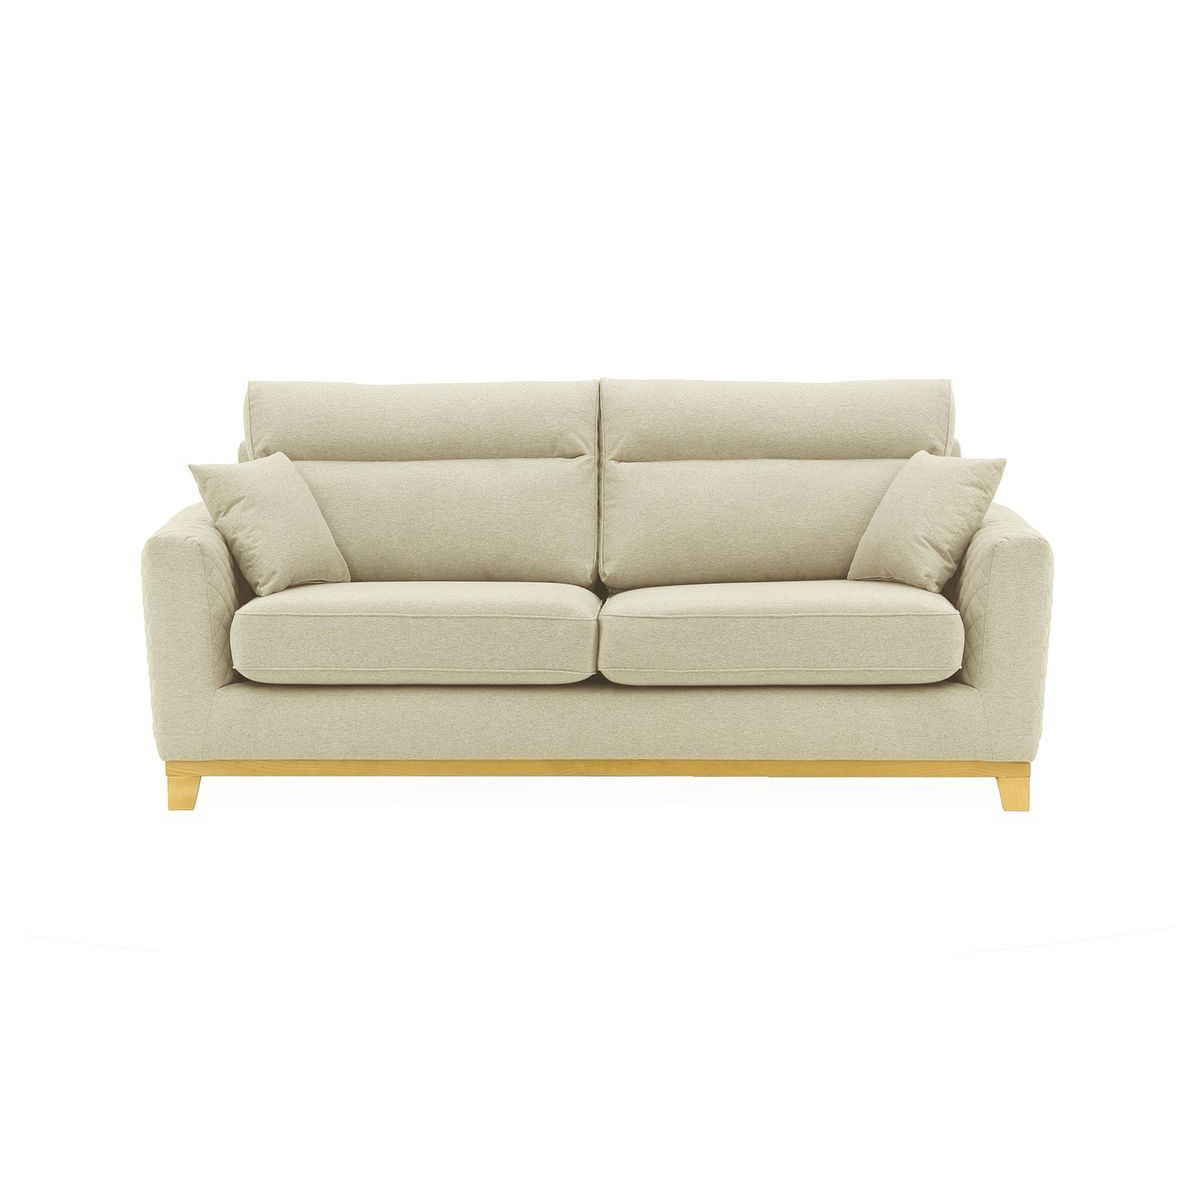 Belfort 3 Seater Sofa, yellow, Leg colour: aveo - image 1